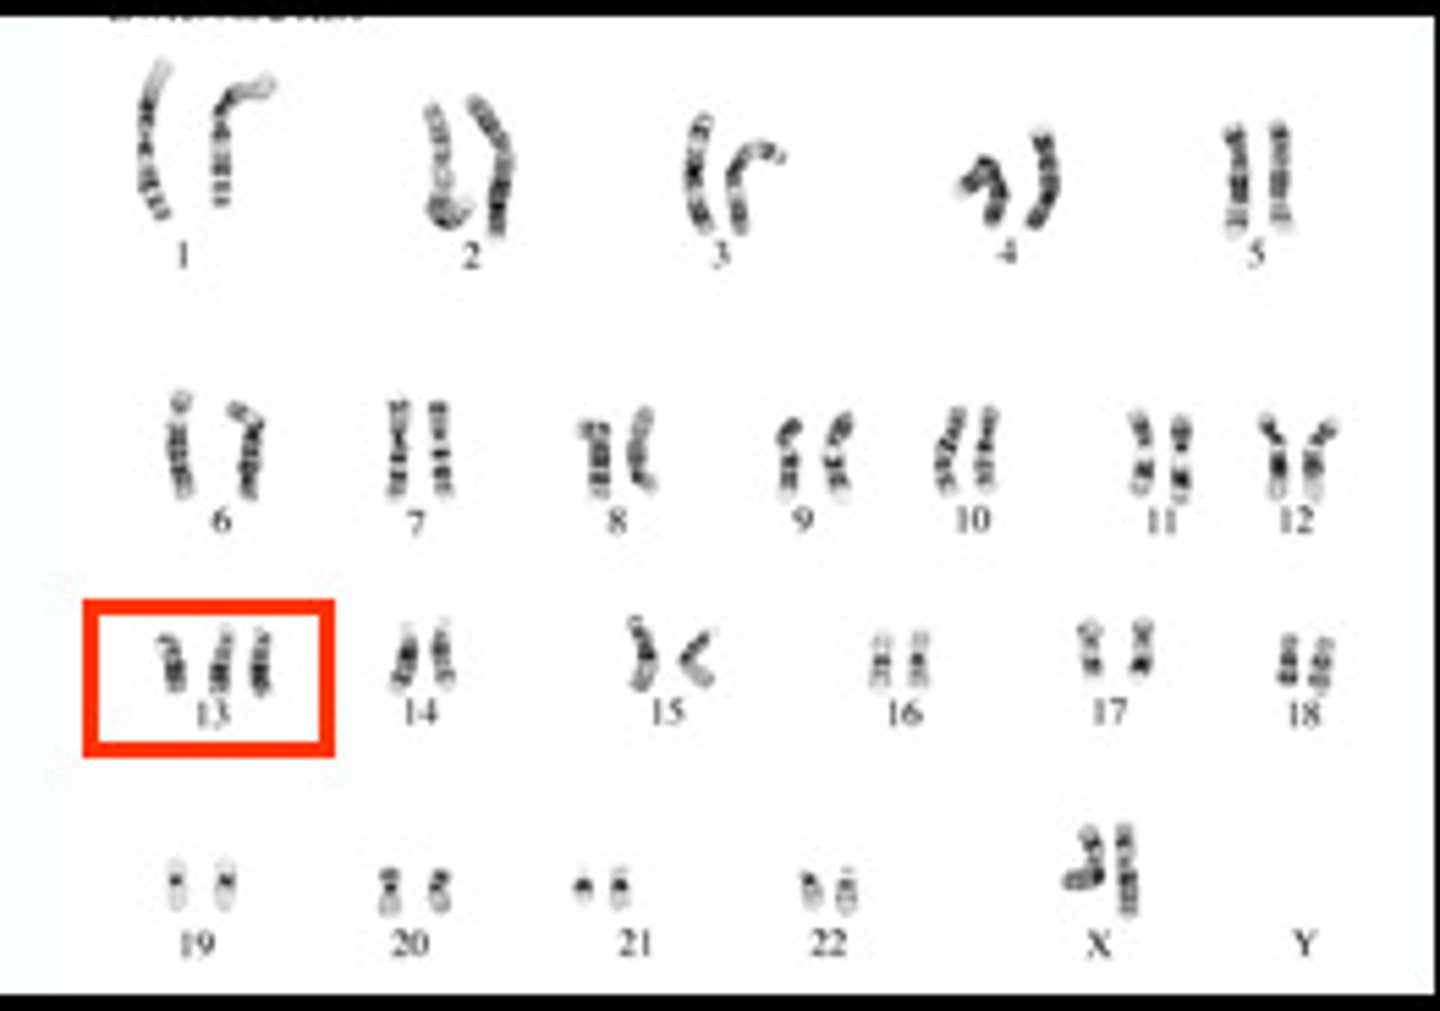 <p>3 copies of a chromosome</p>